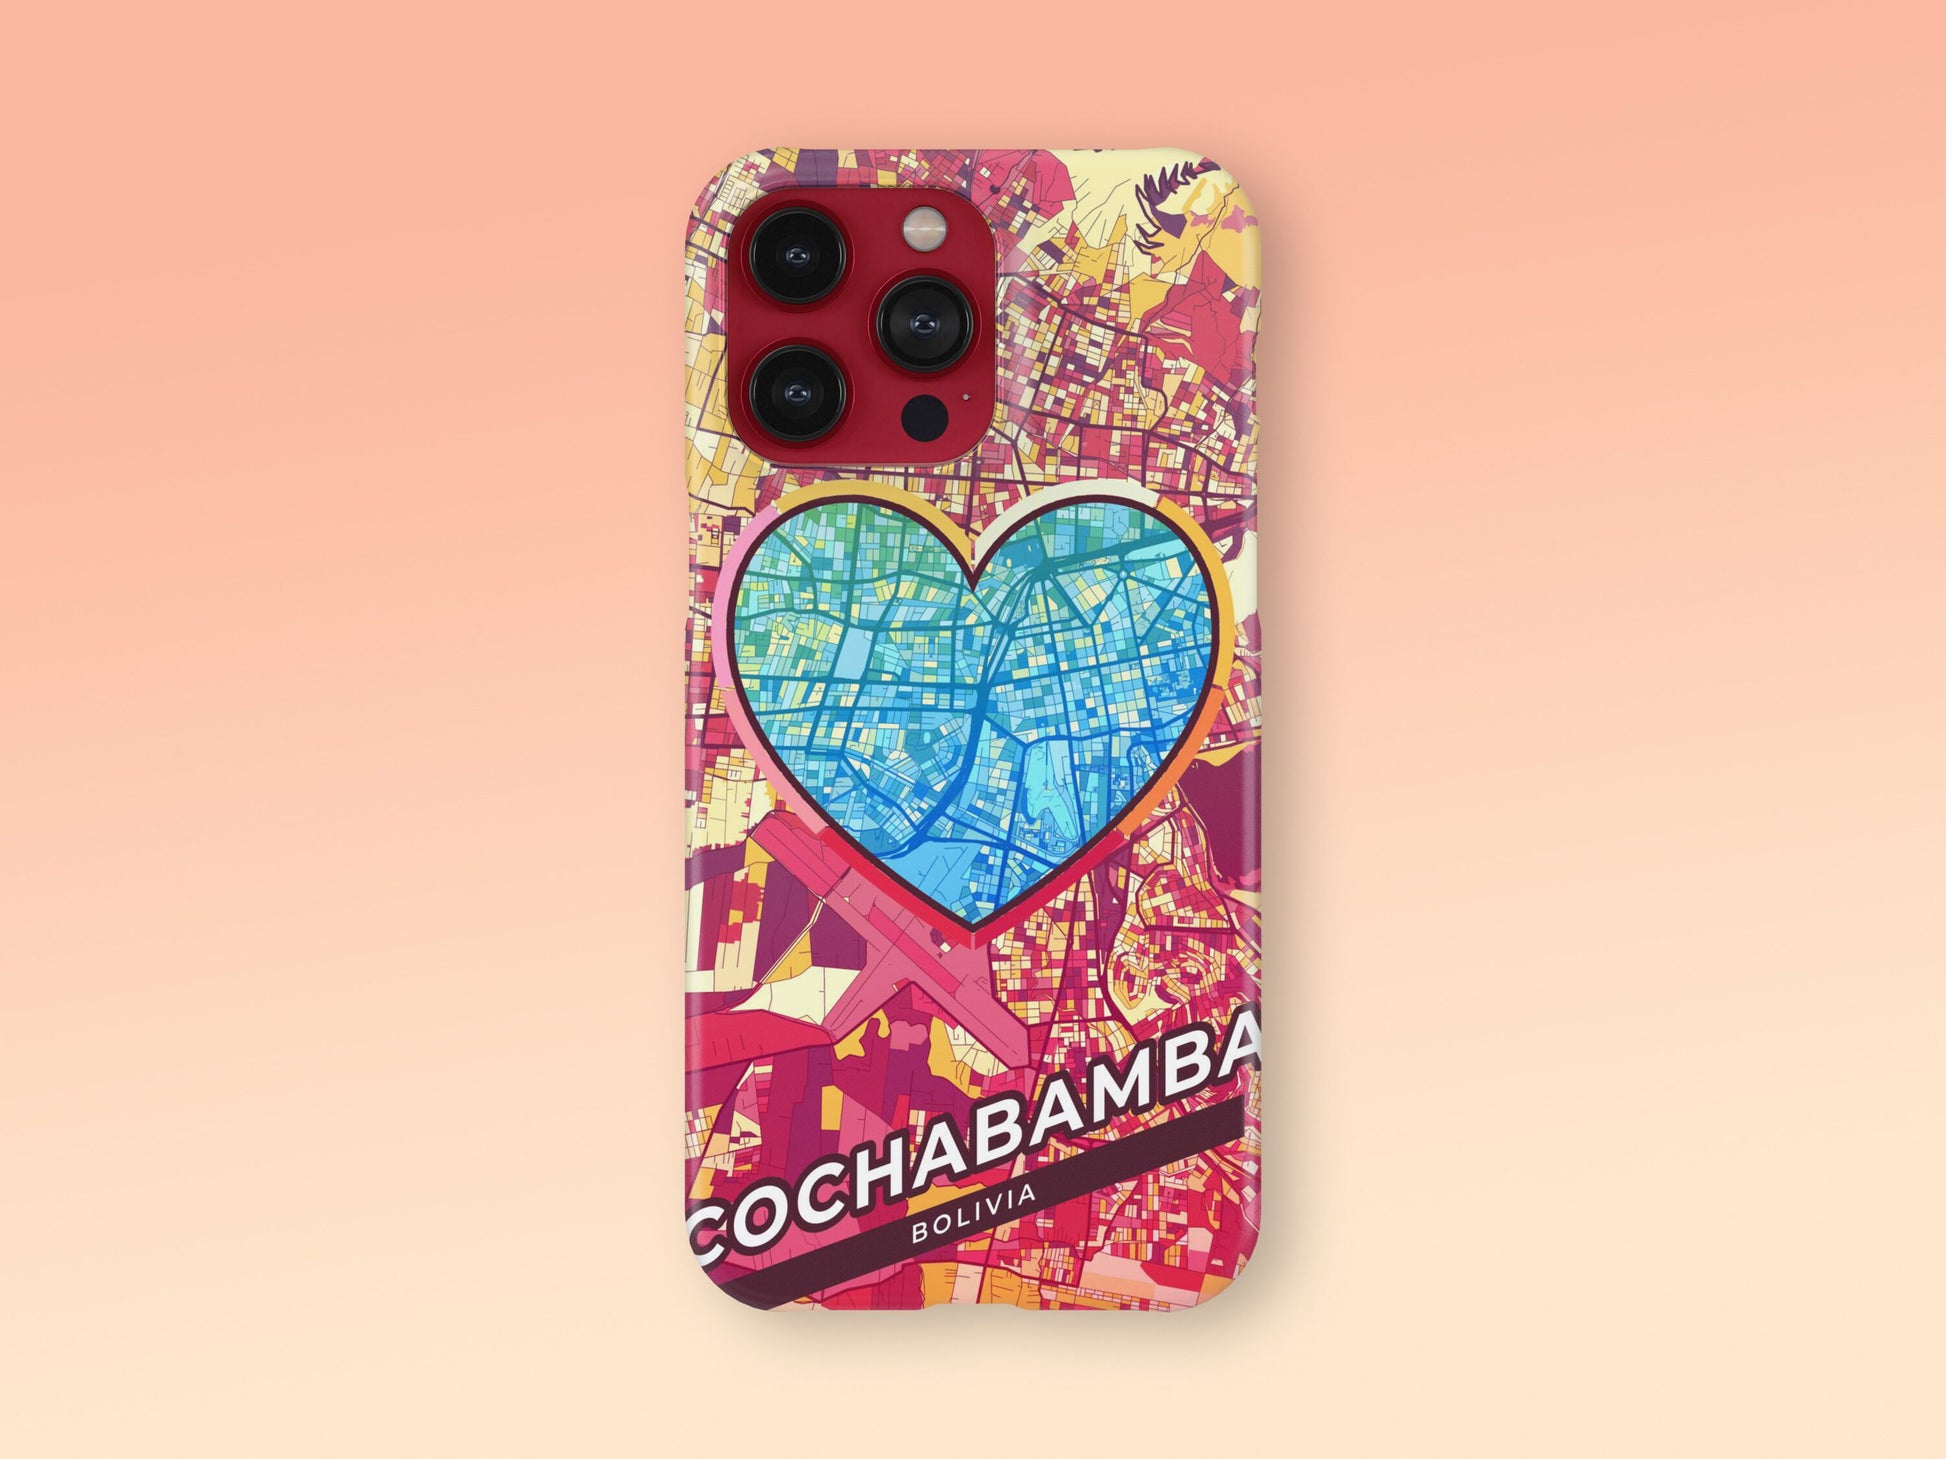 Cochabamba Bolivia slim phone case with colorful icon. Birthday, wedding or housewarming gift. Couple match cases. 2